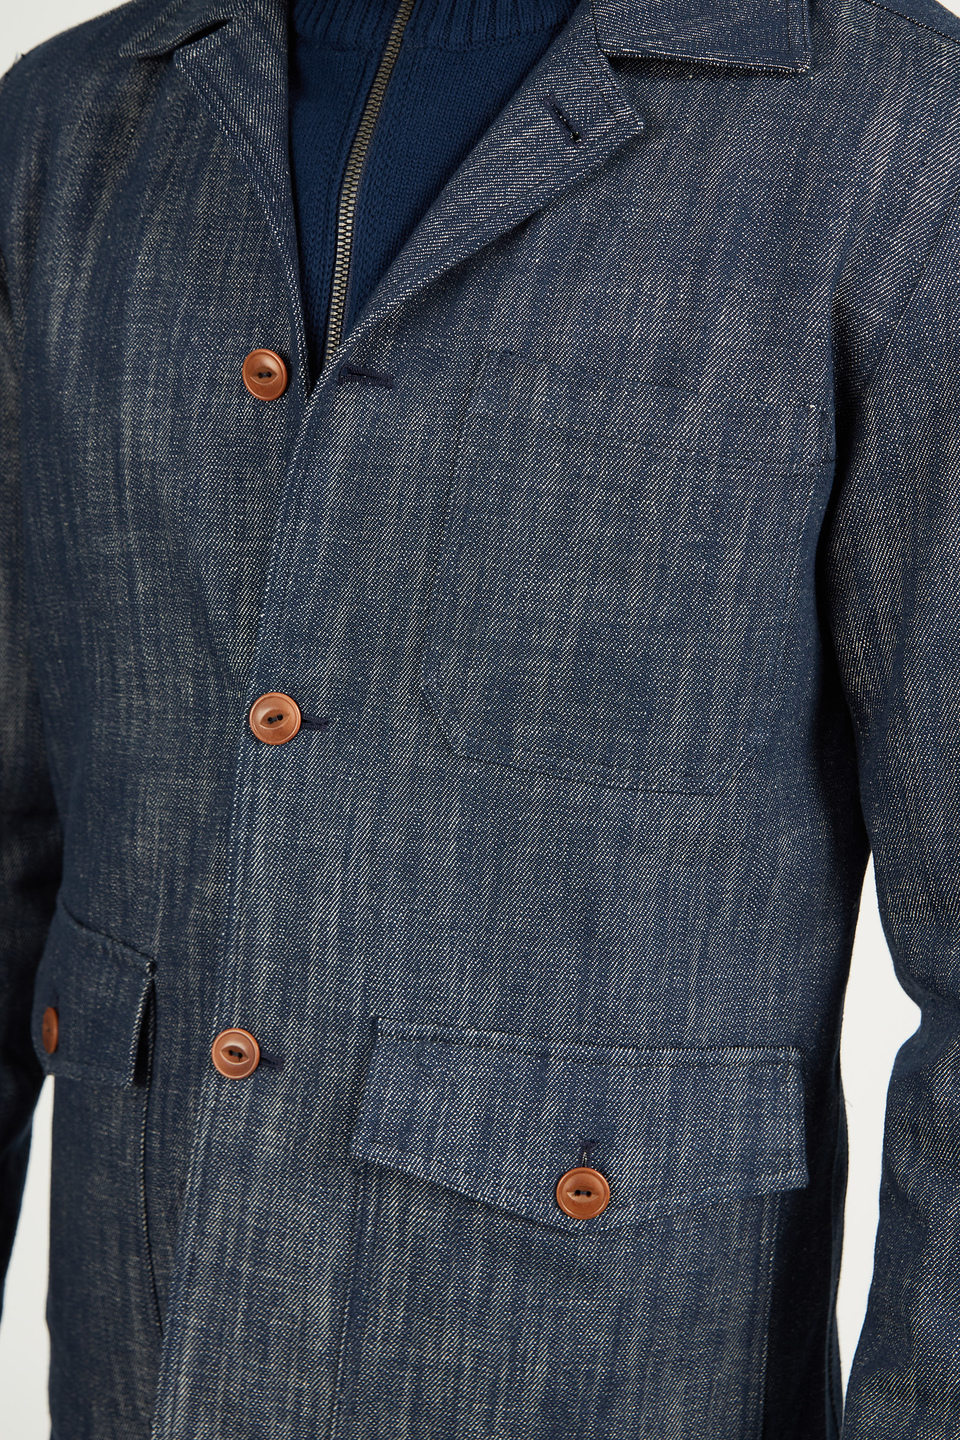 Men's Sahariana jacket in 100% cotton, regular fit model | La Martina - Official Online Shop